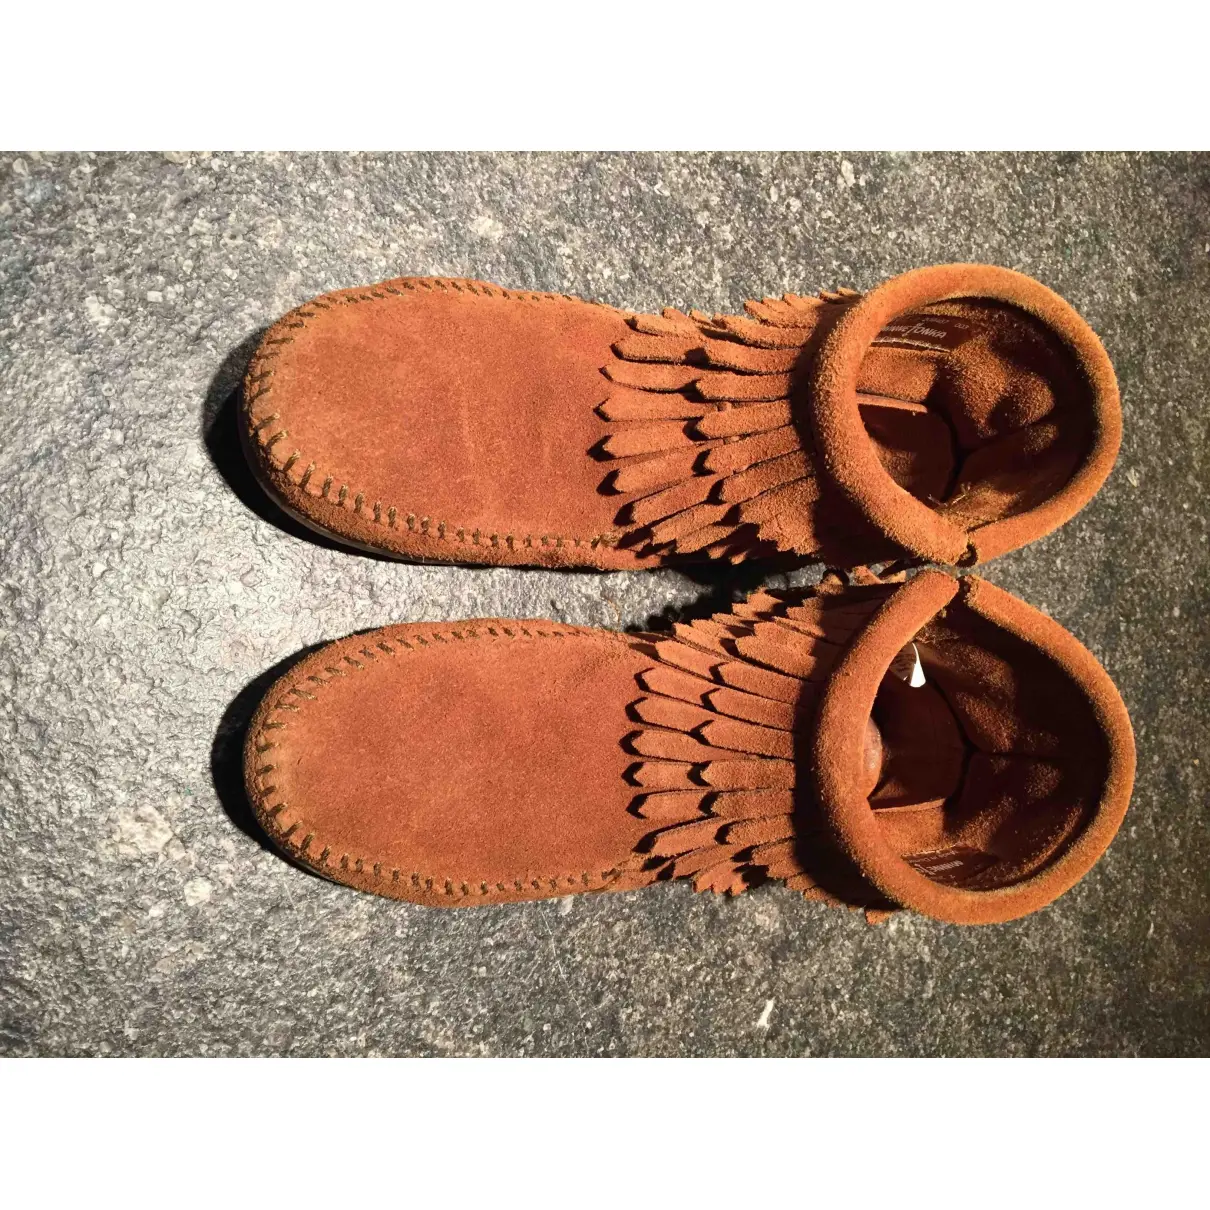 Minnetonka Mocassin boots for sale